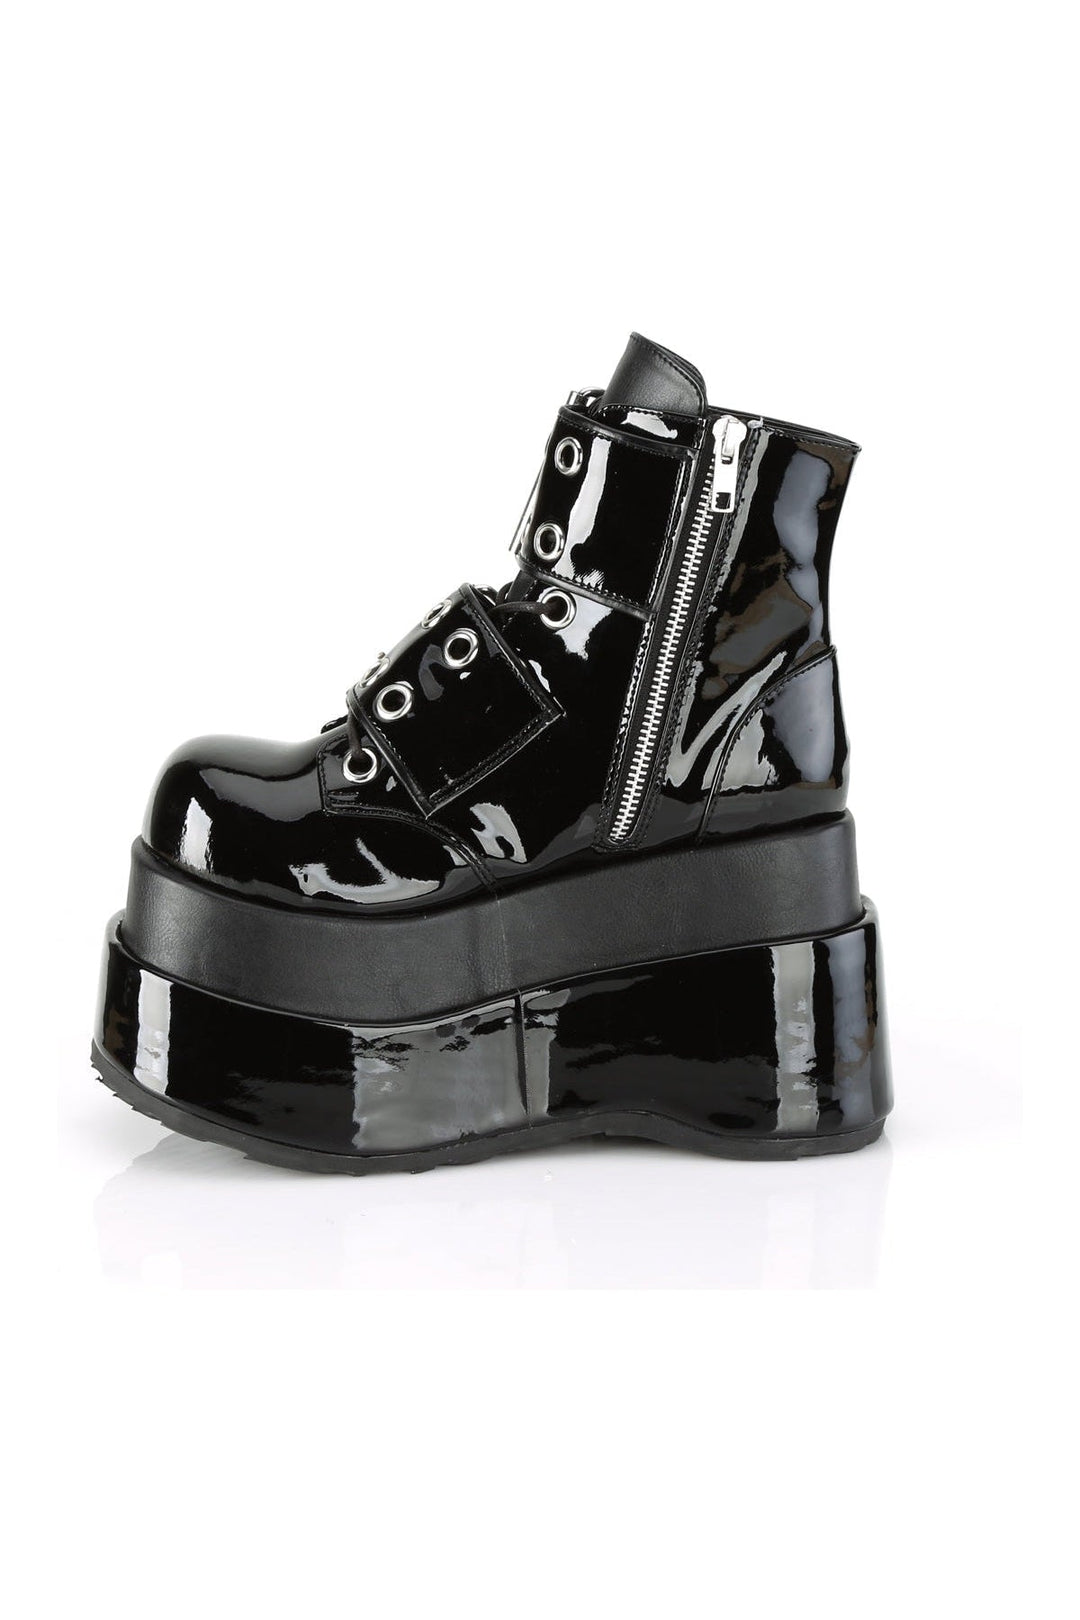 BEAR-104 Black Vegan Leather Ankle Boot